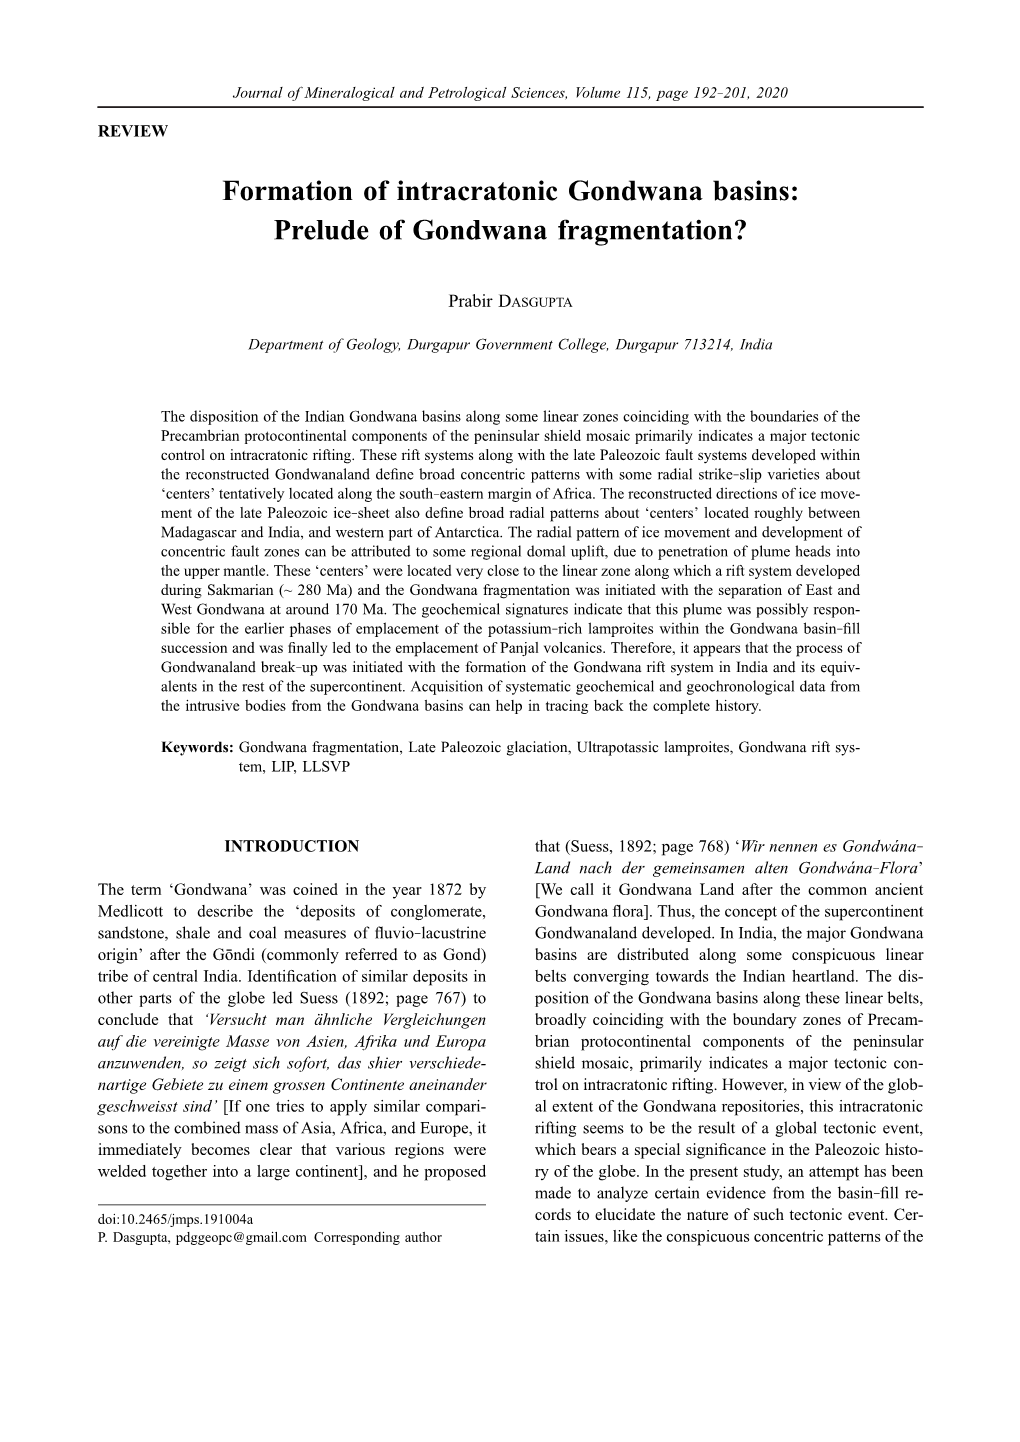 Formation of Intracratonic Gondwana Basins: Prelude of Gondwana Fragmentation?